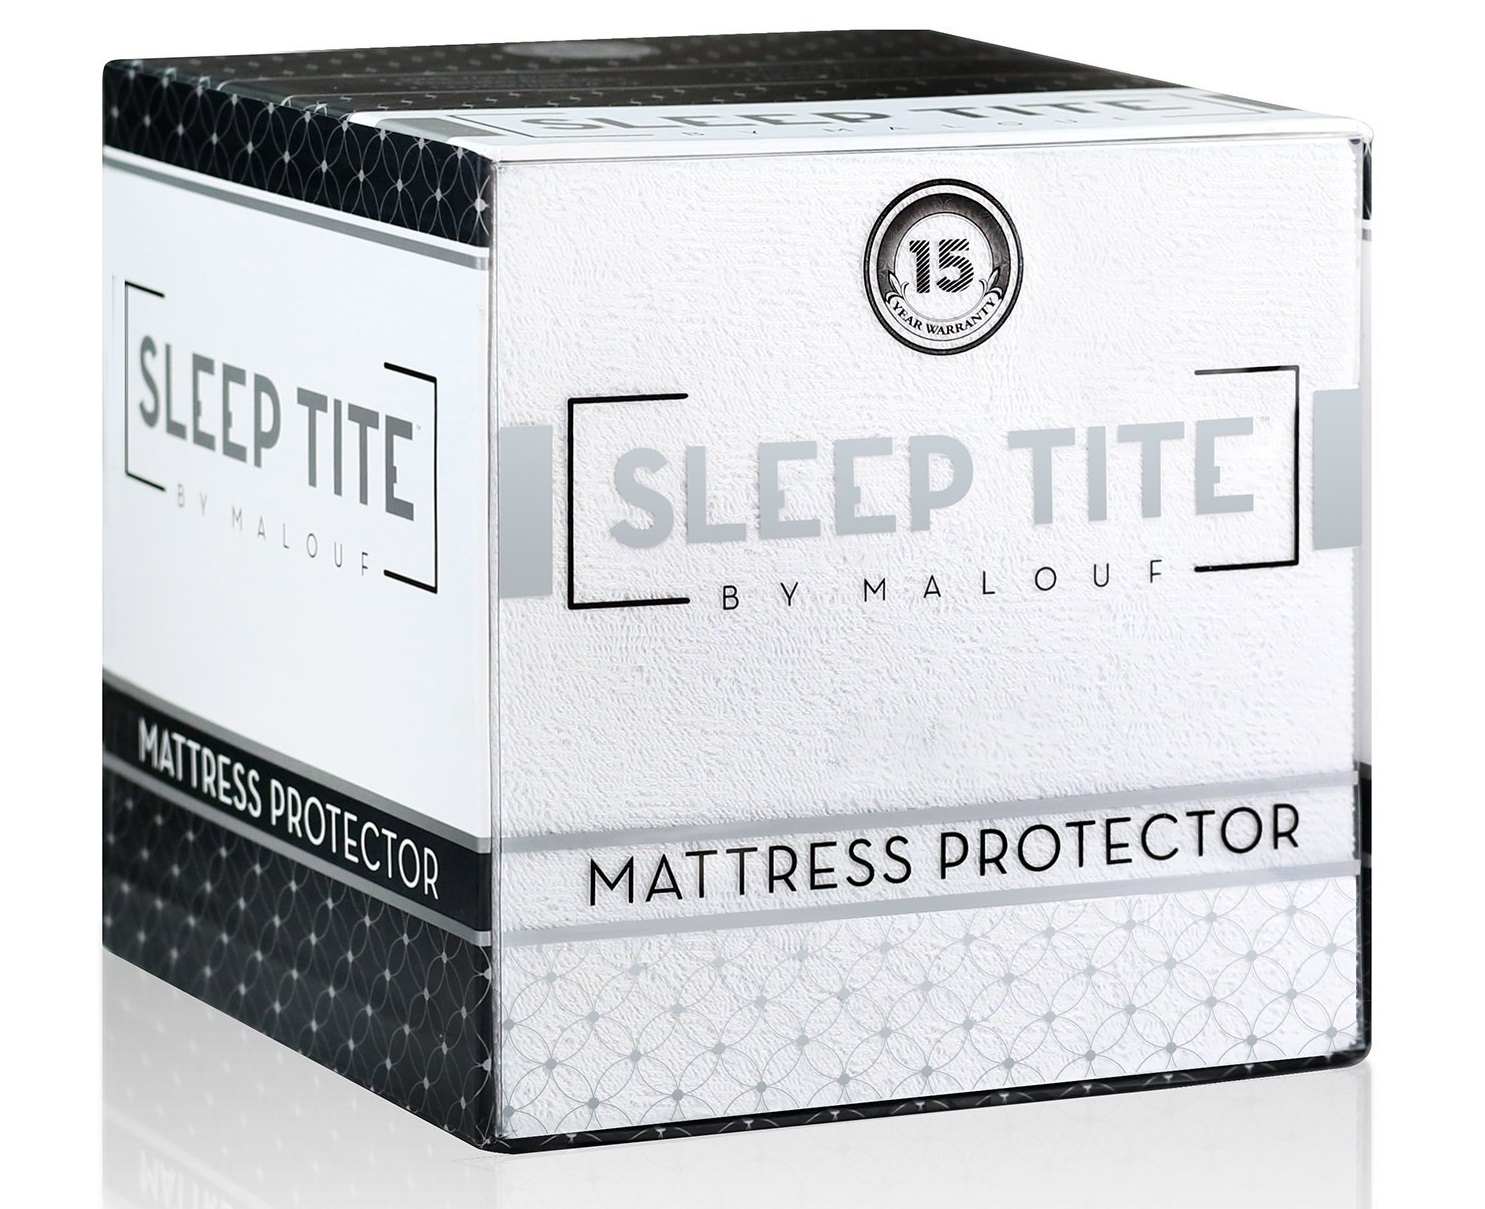 malouf sleep tite mattress protector